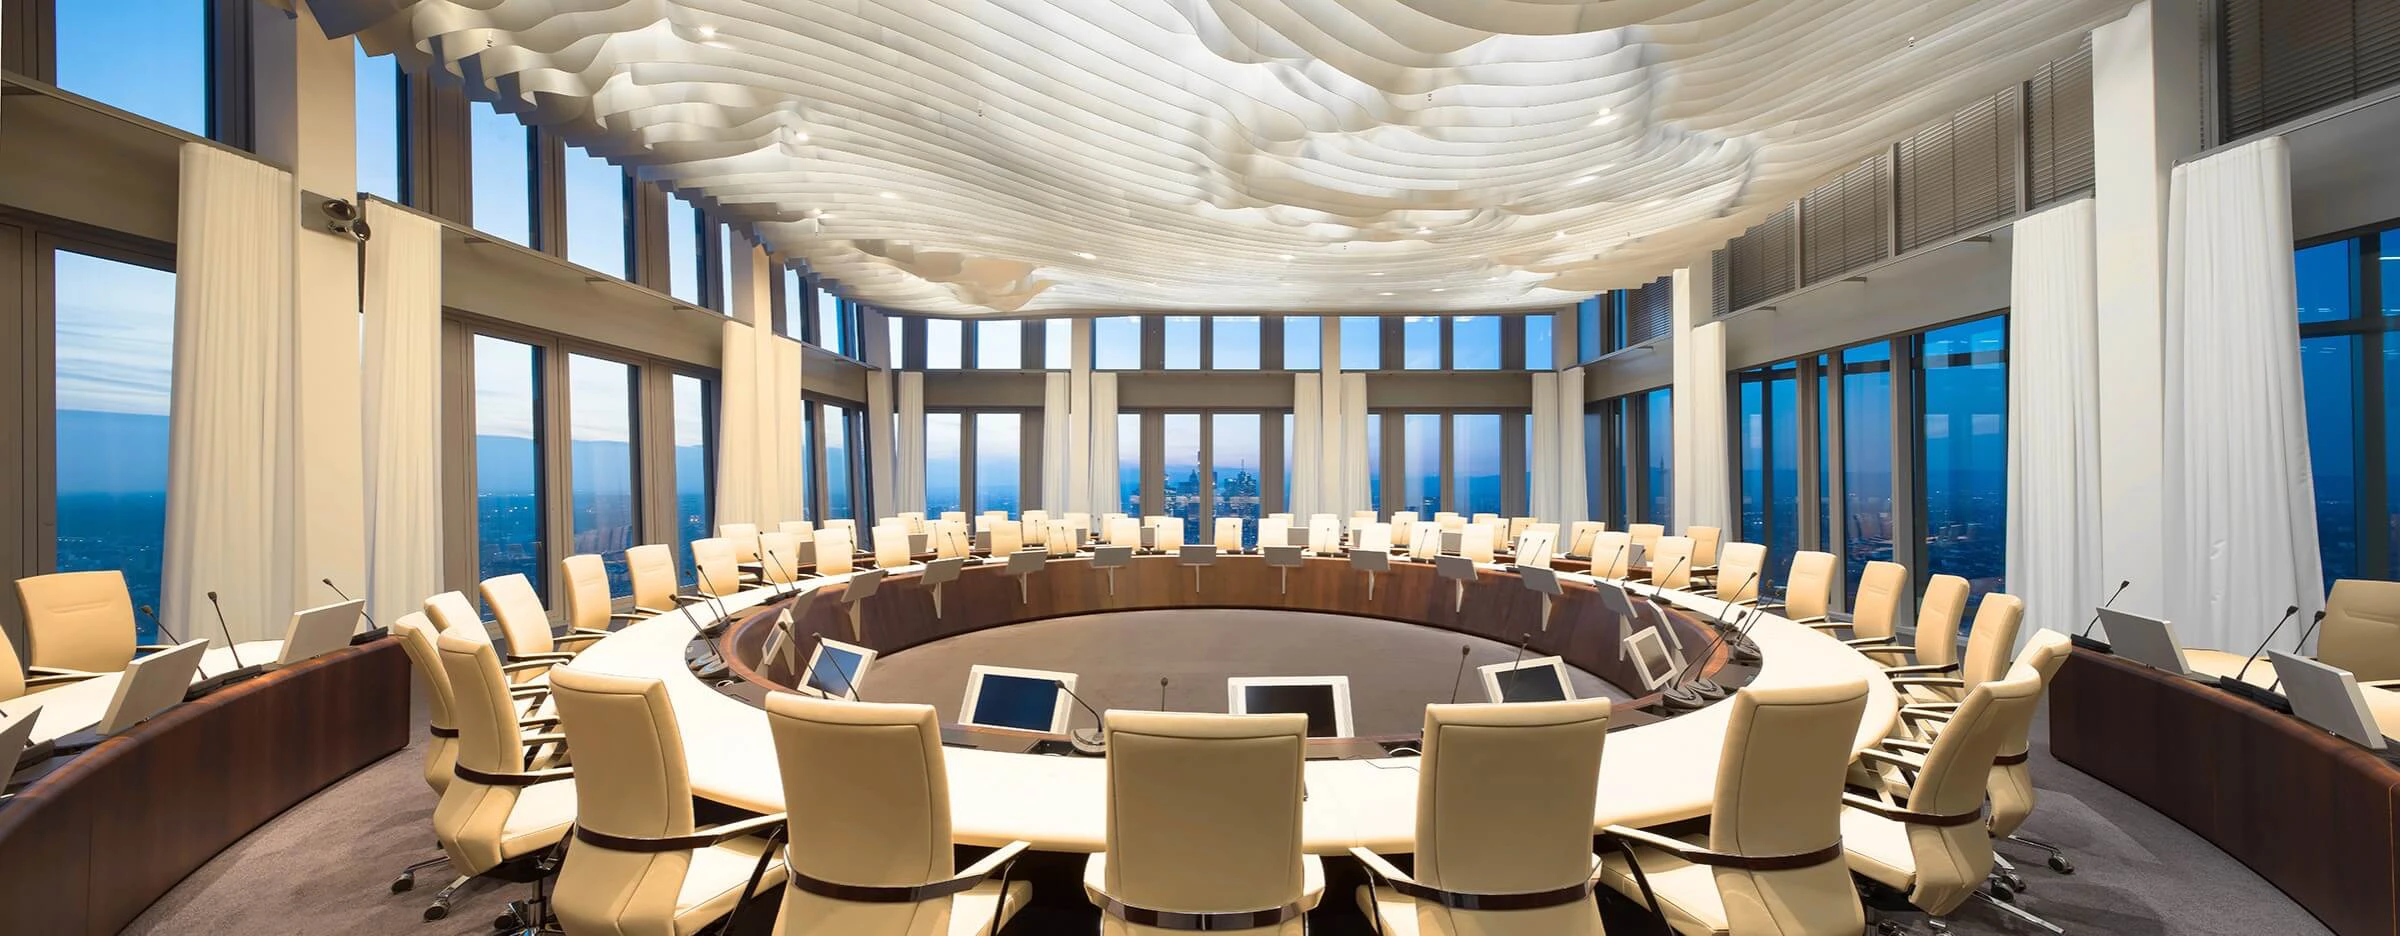 ECB meeting room in Frankfurt with NOVIS custom screens